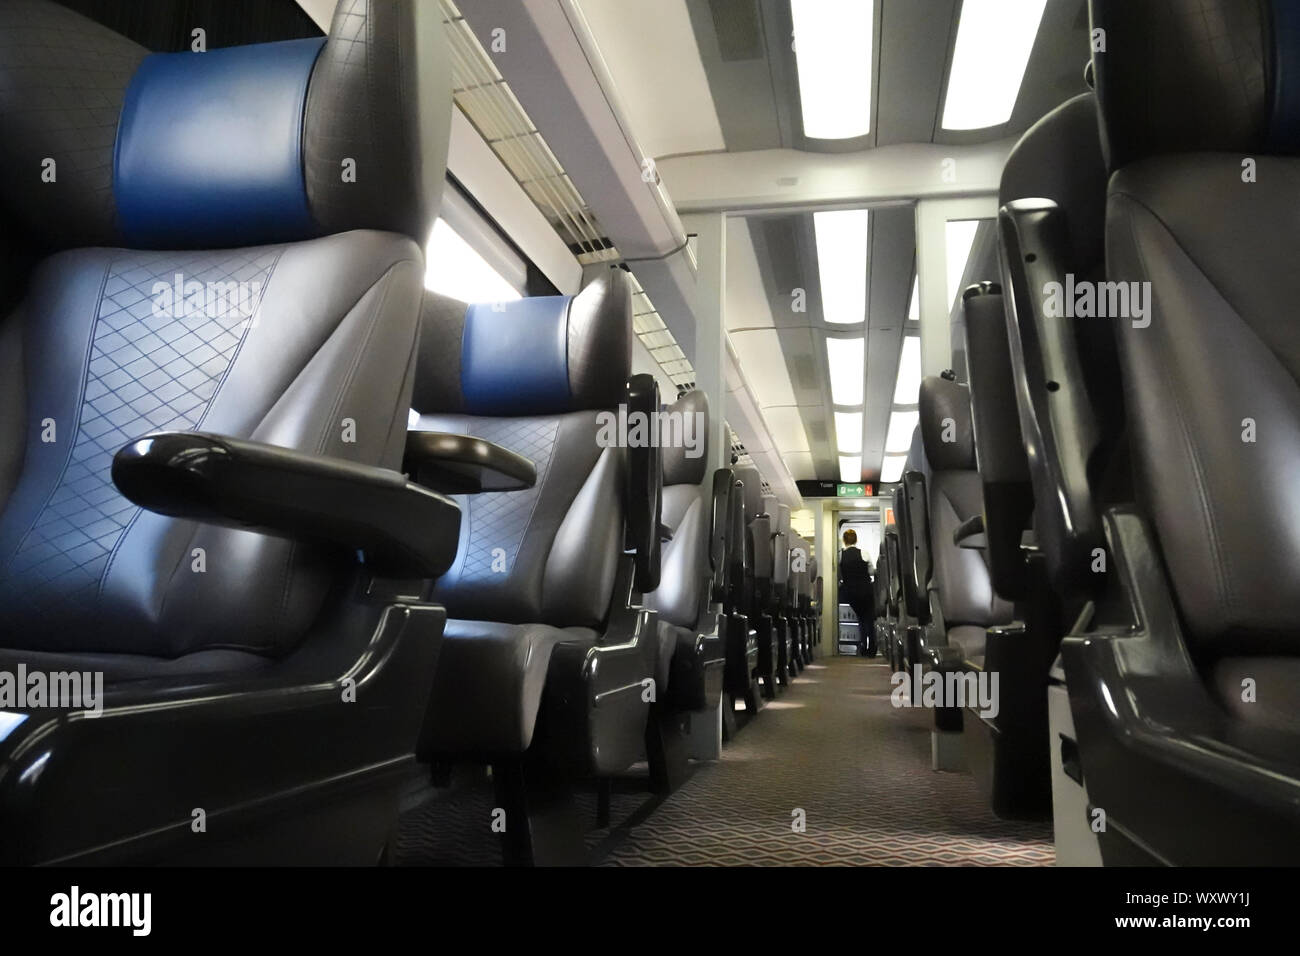 Scotrail train first class carraige interior Stock Photo